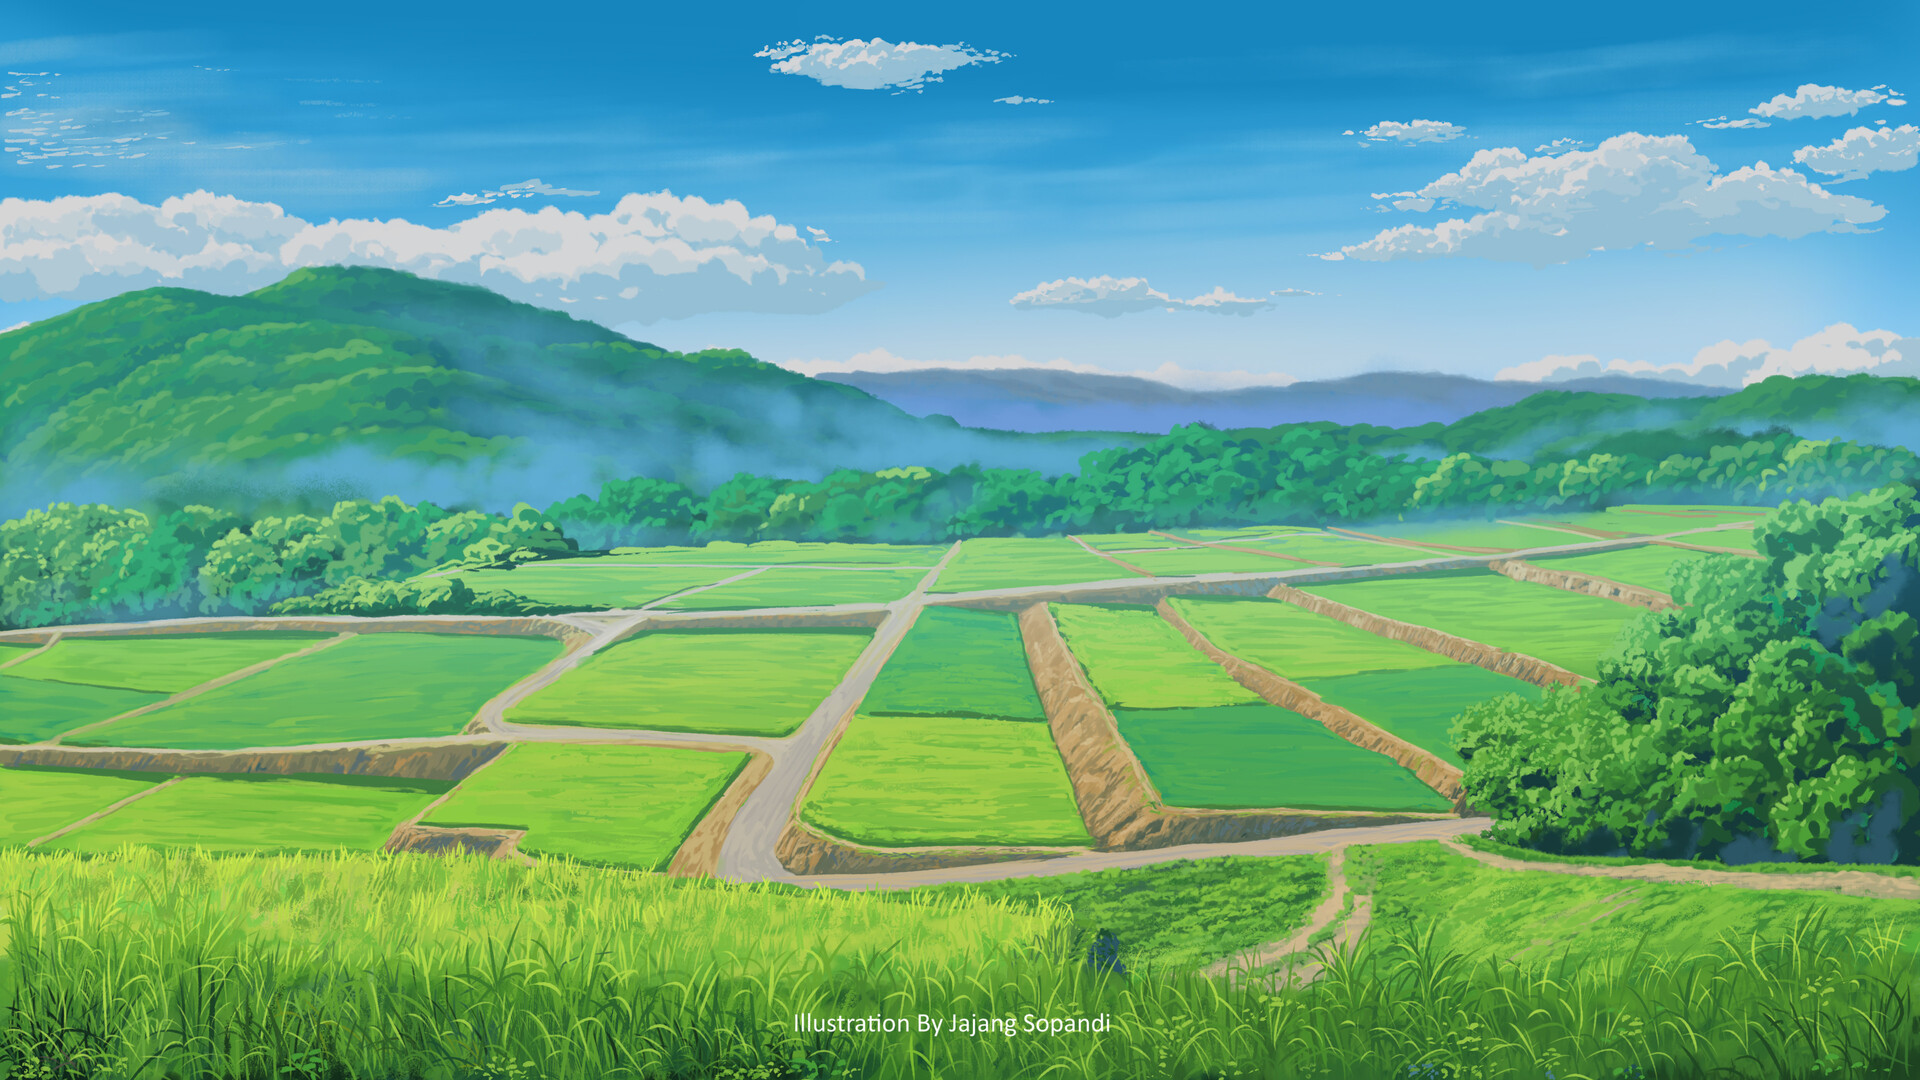 ArtStation - Farming Anime